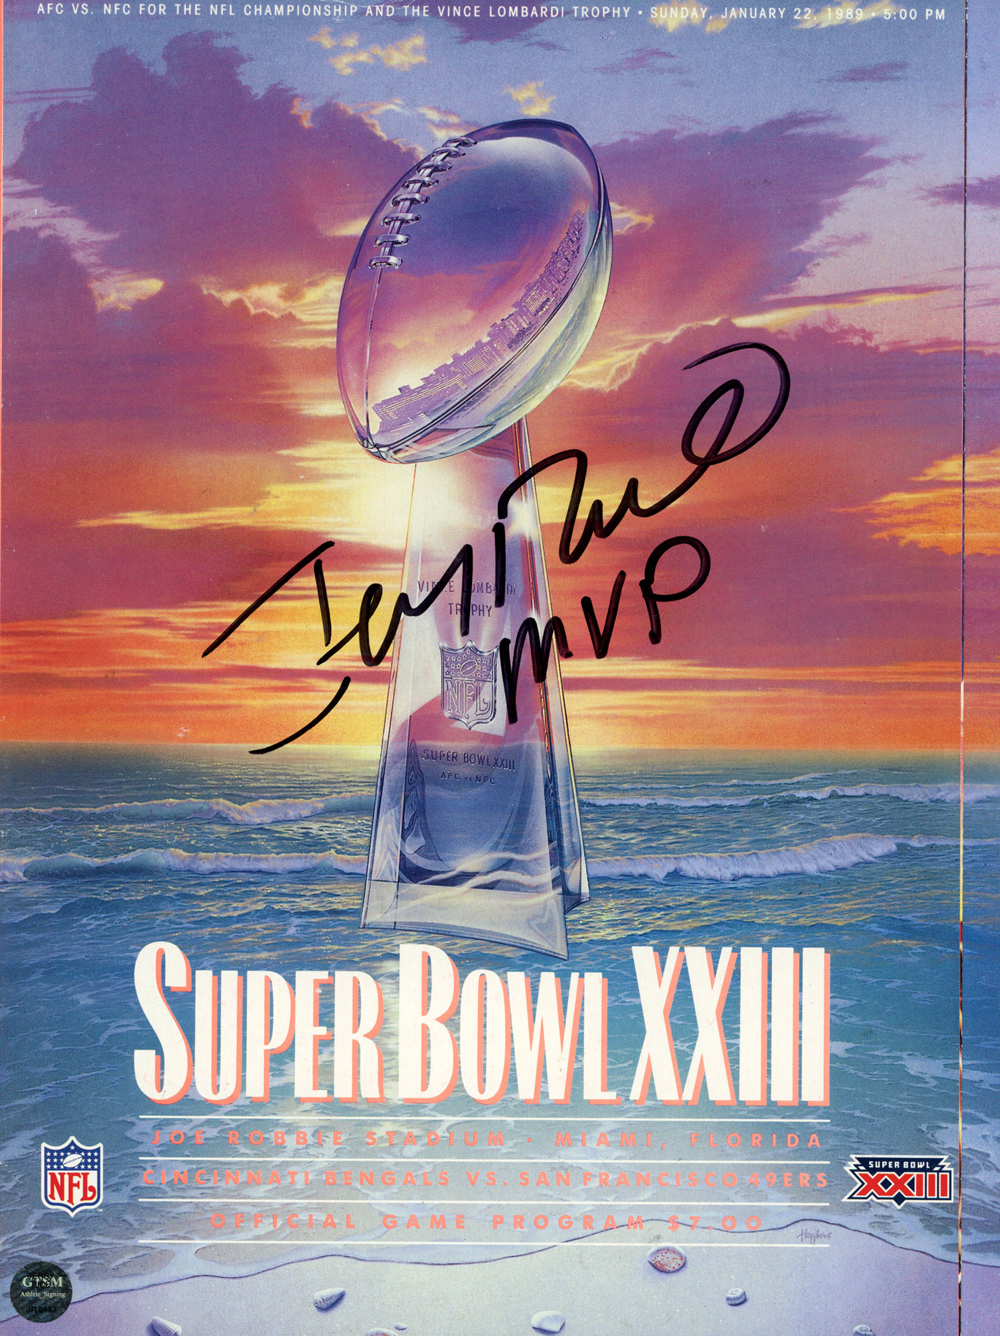 Jerry Rice Autographed/Signed Super Bowl XXIII Program SB MVP Beckett 37389